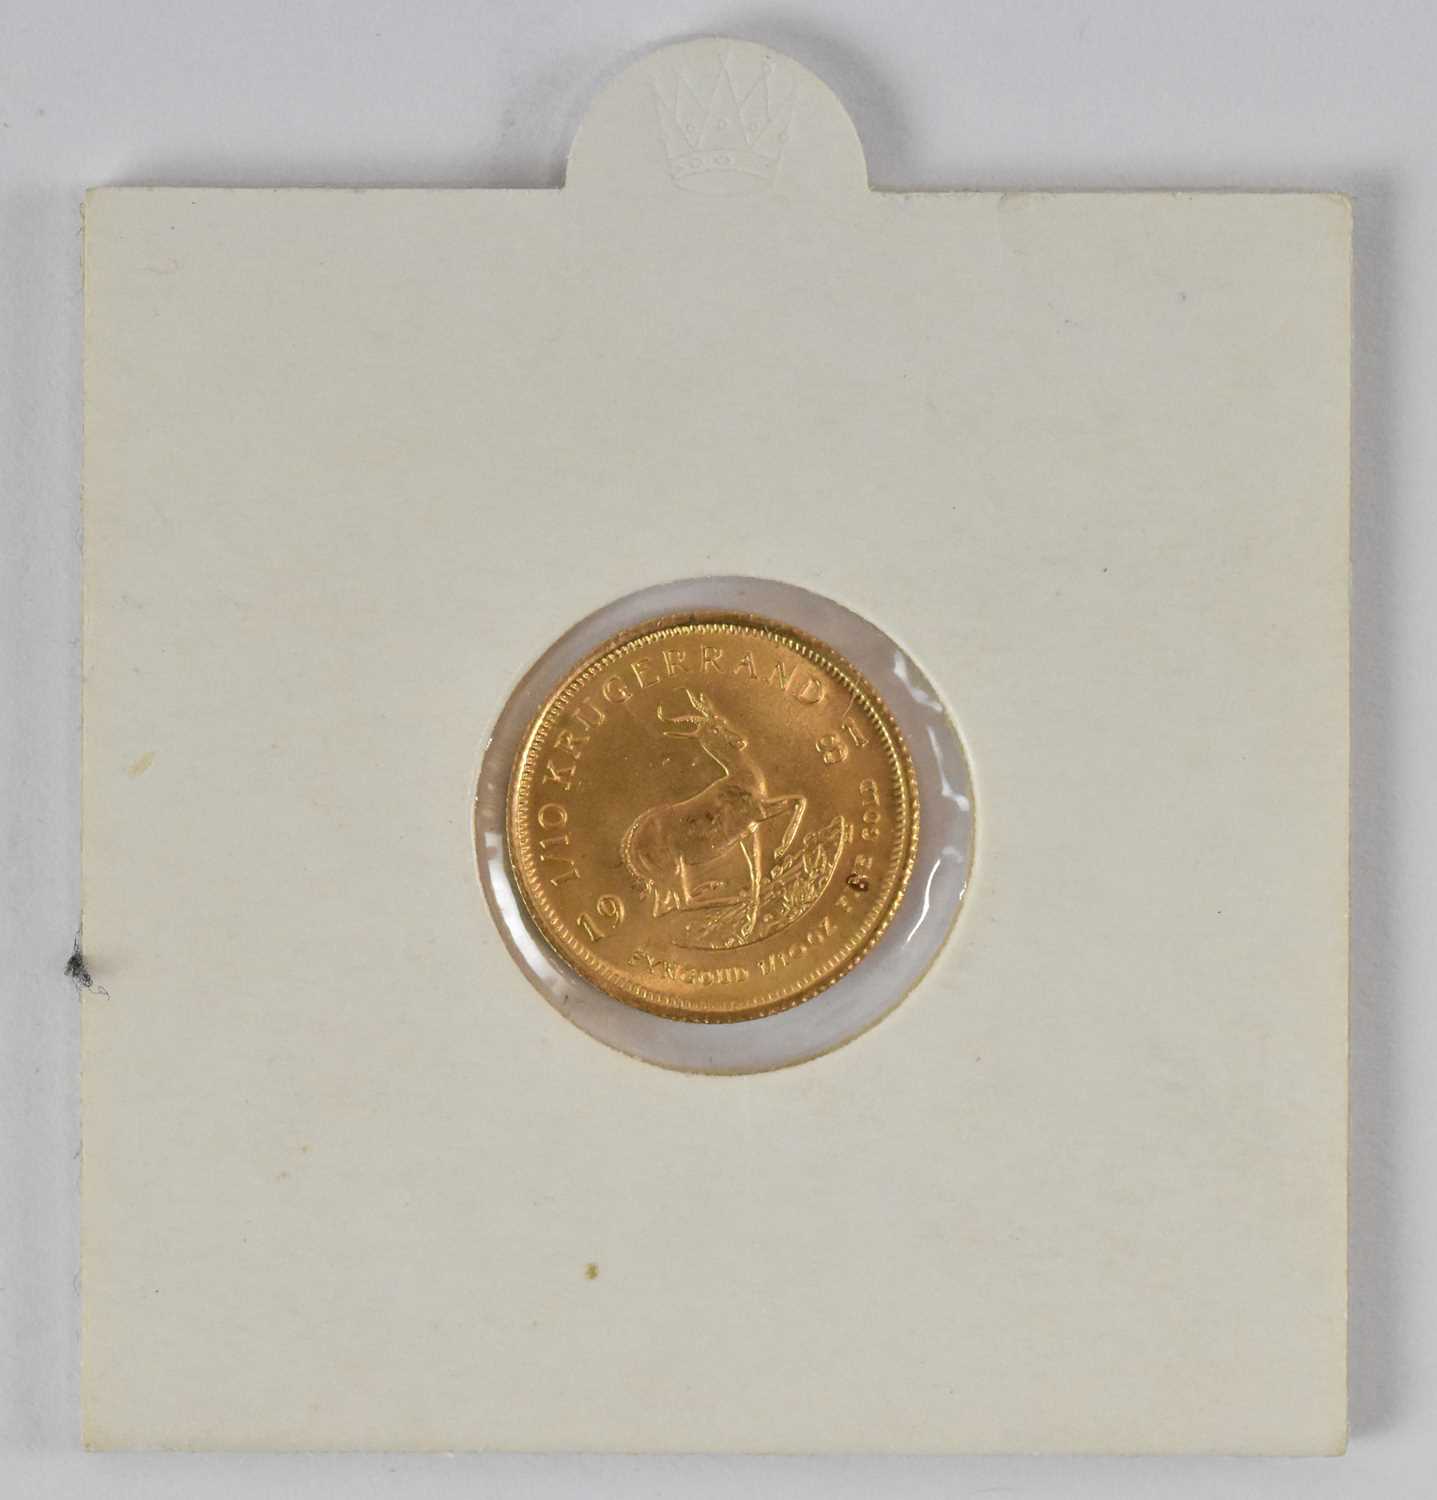 A 1981 1/10 oz fine gold krugerrand.